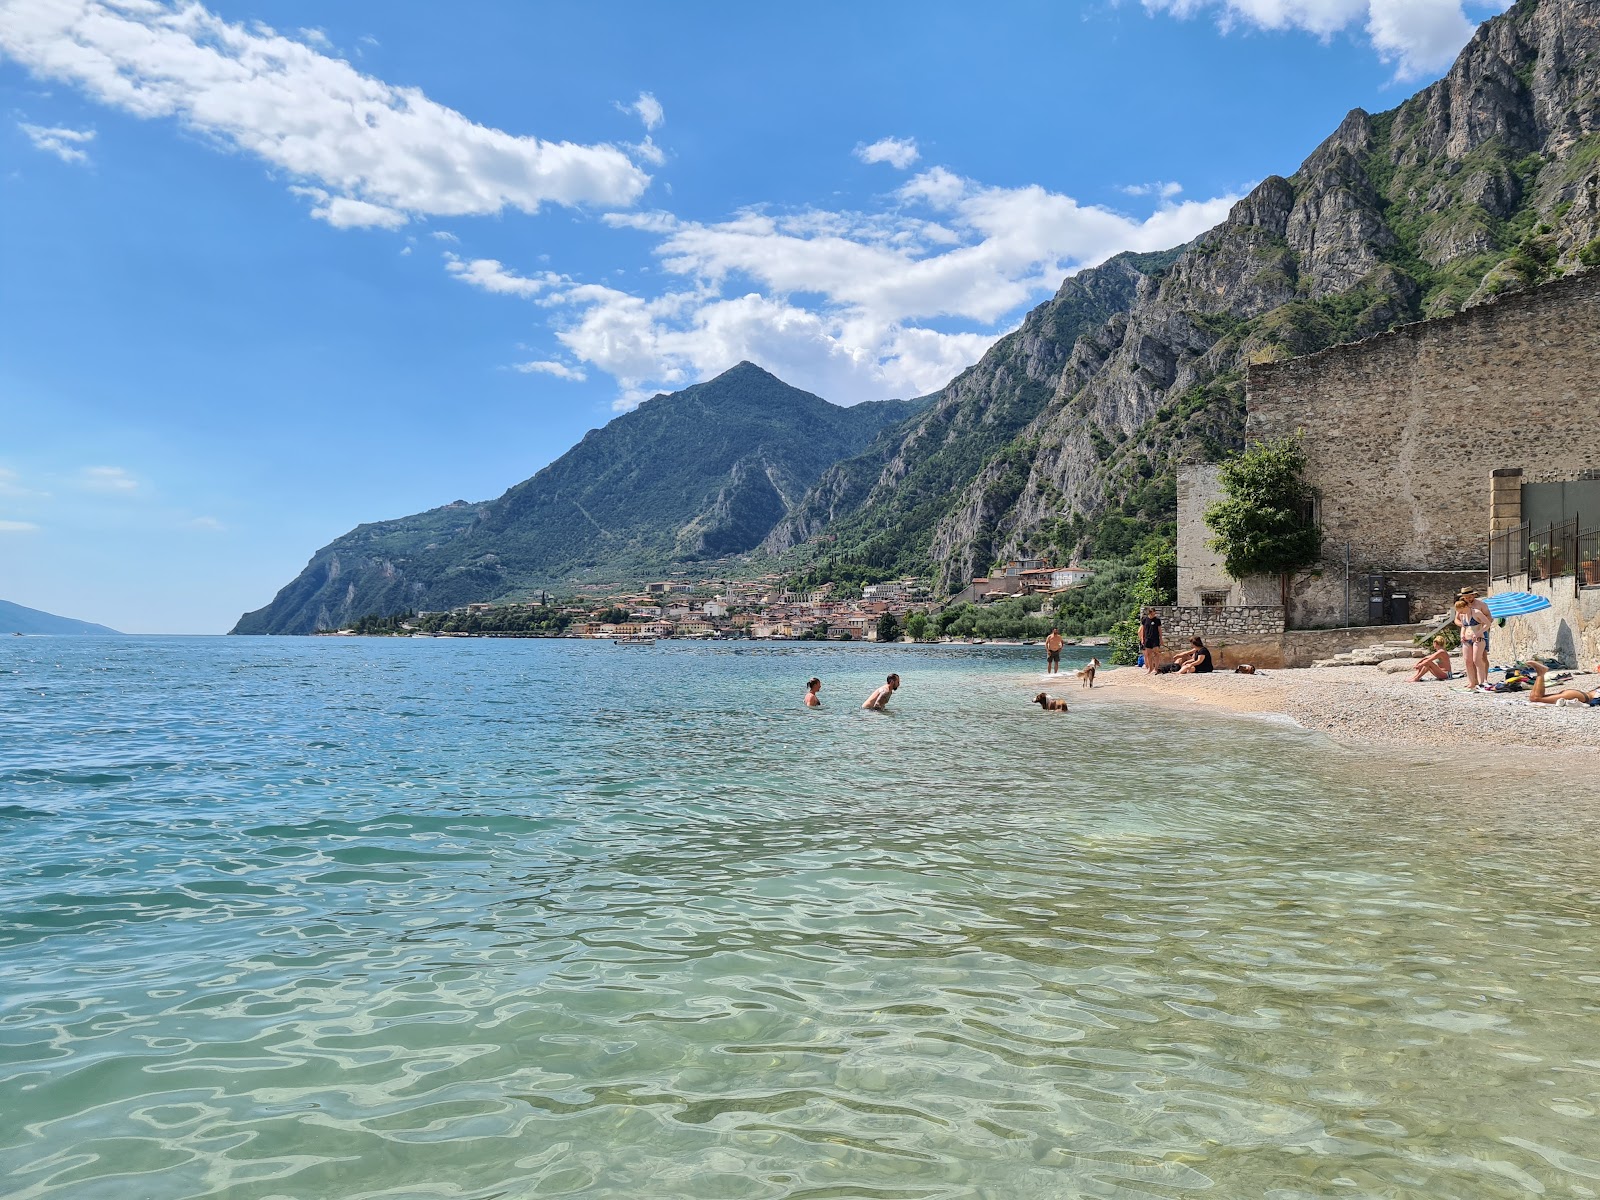 Foto von Spiaggia Per Cani mit grauer kies Oberfläche